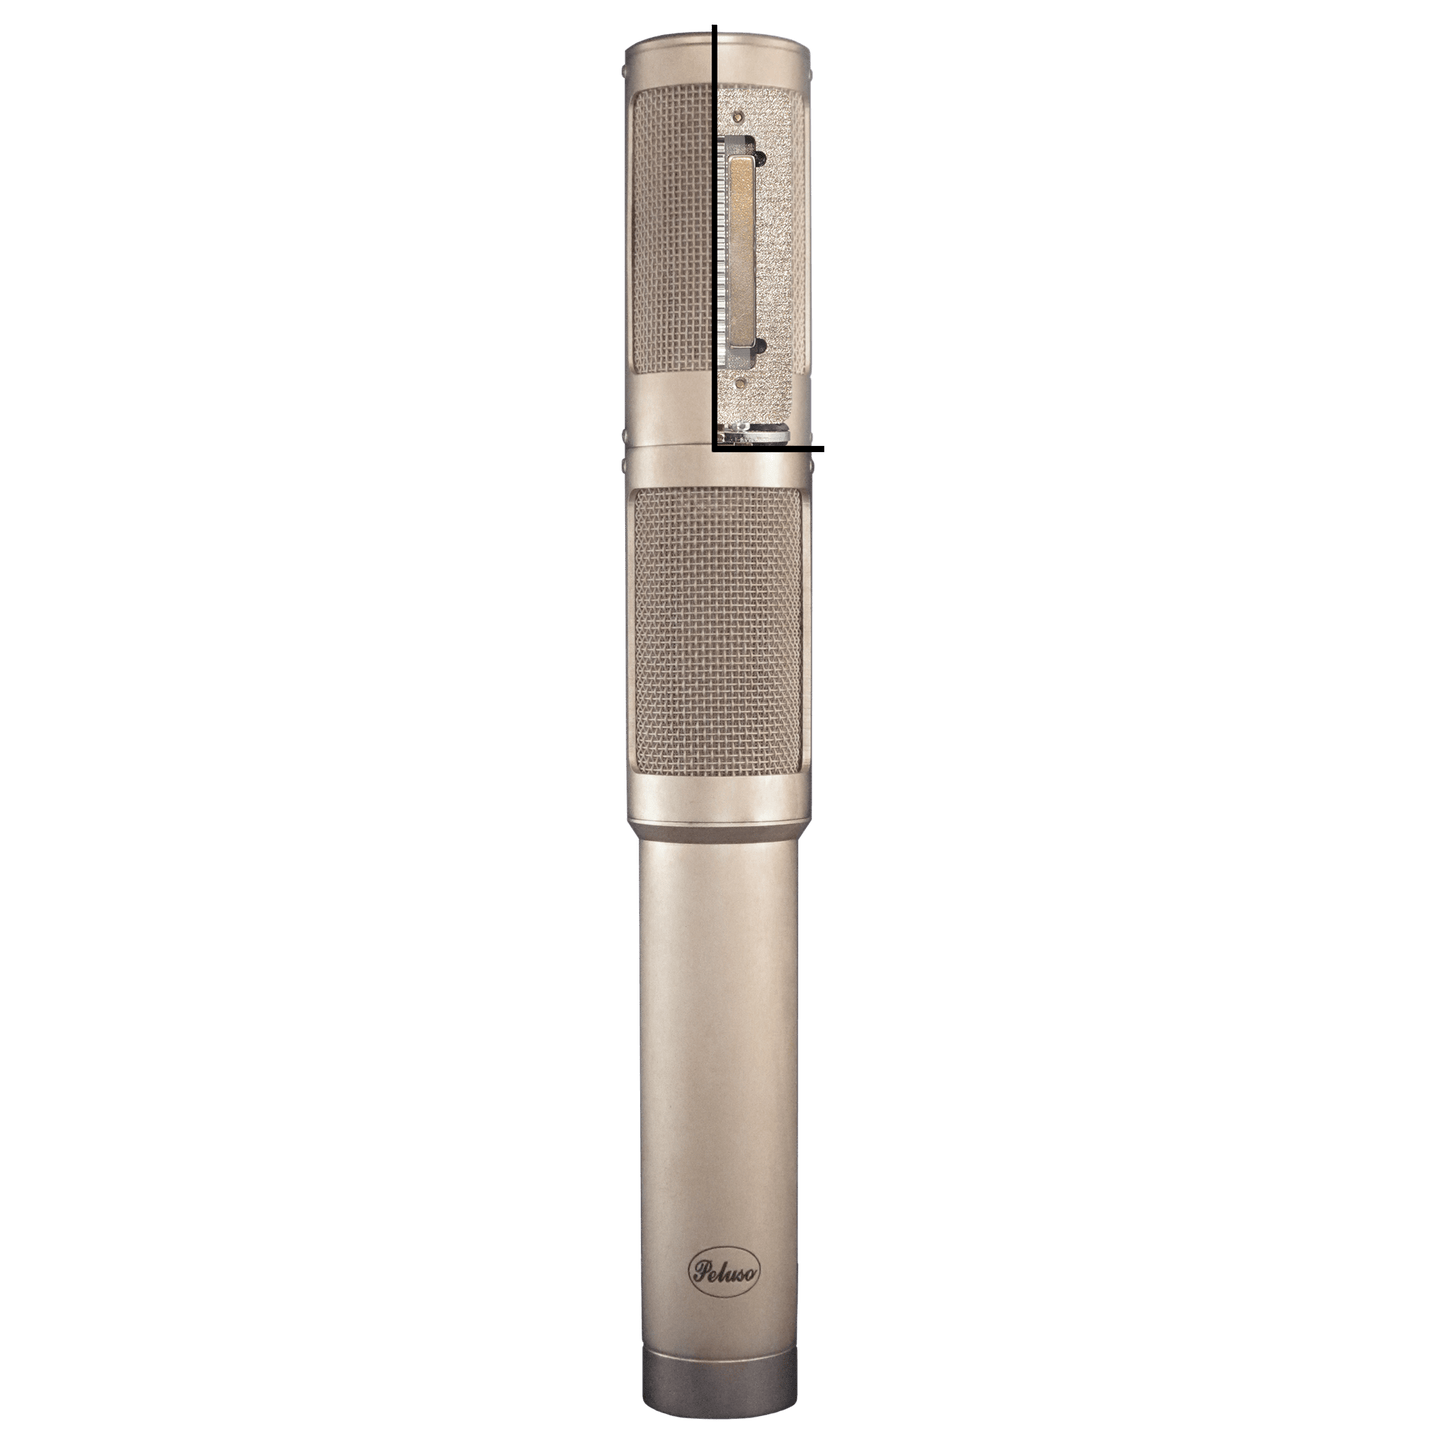 Peluso SR-14 Stereo Ribbon Microphone